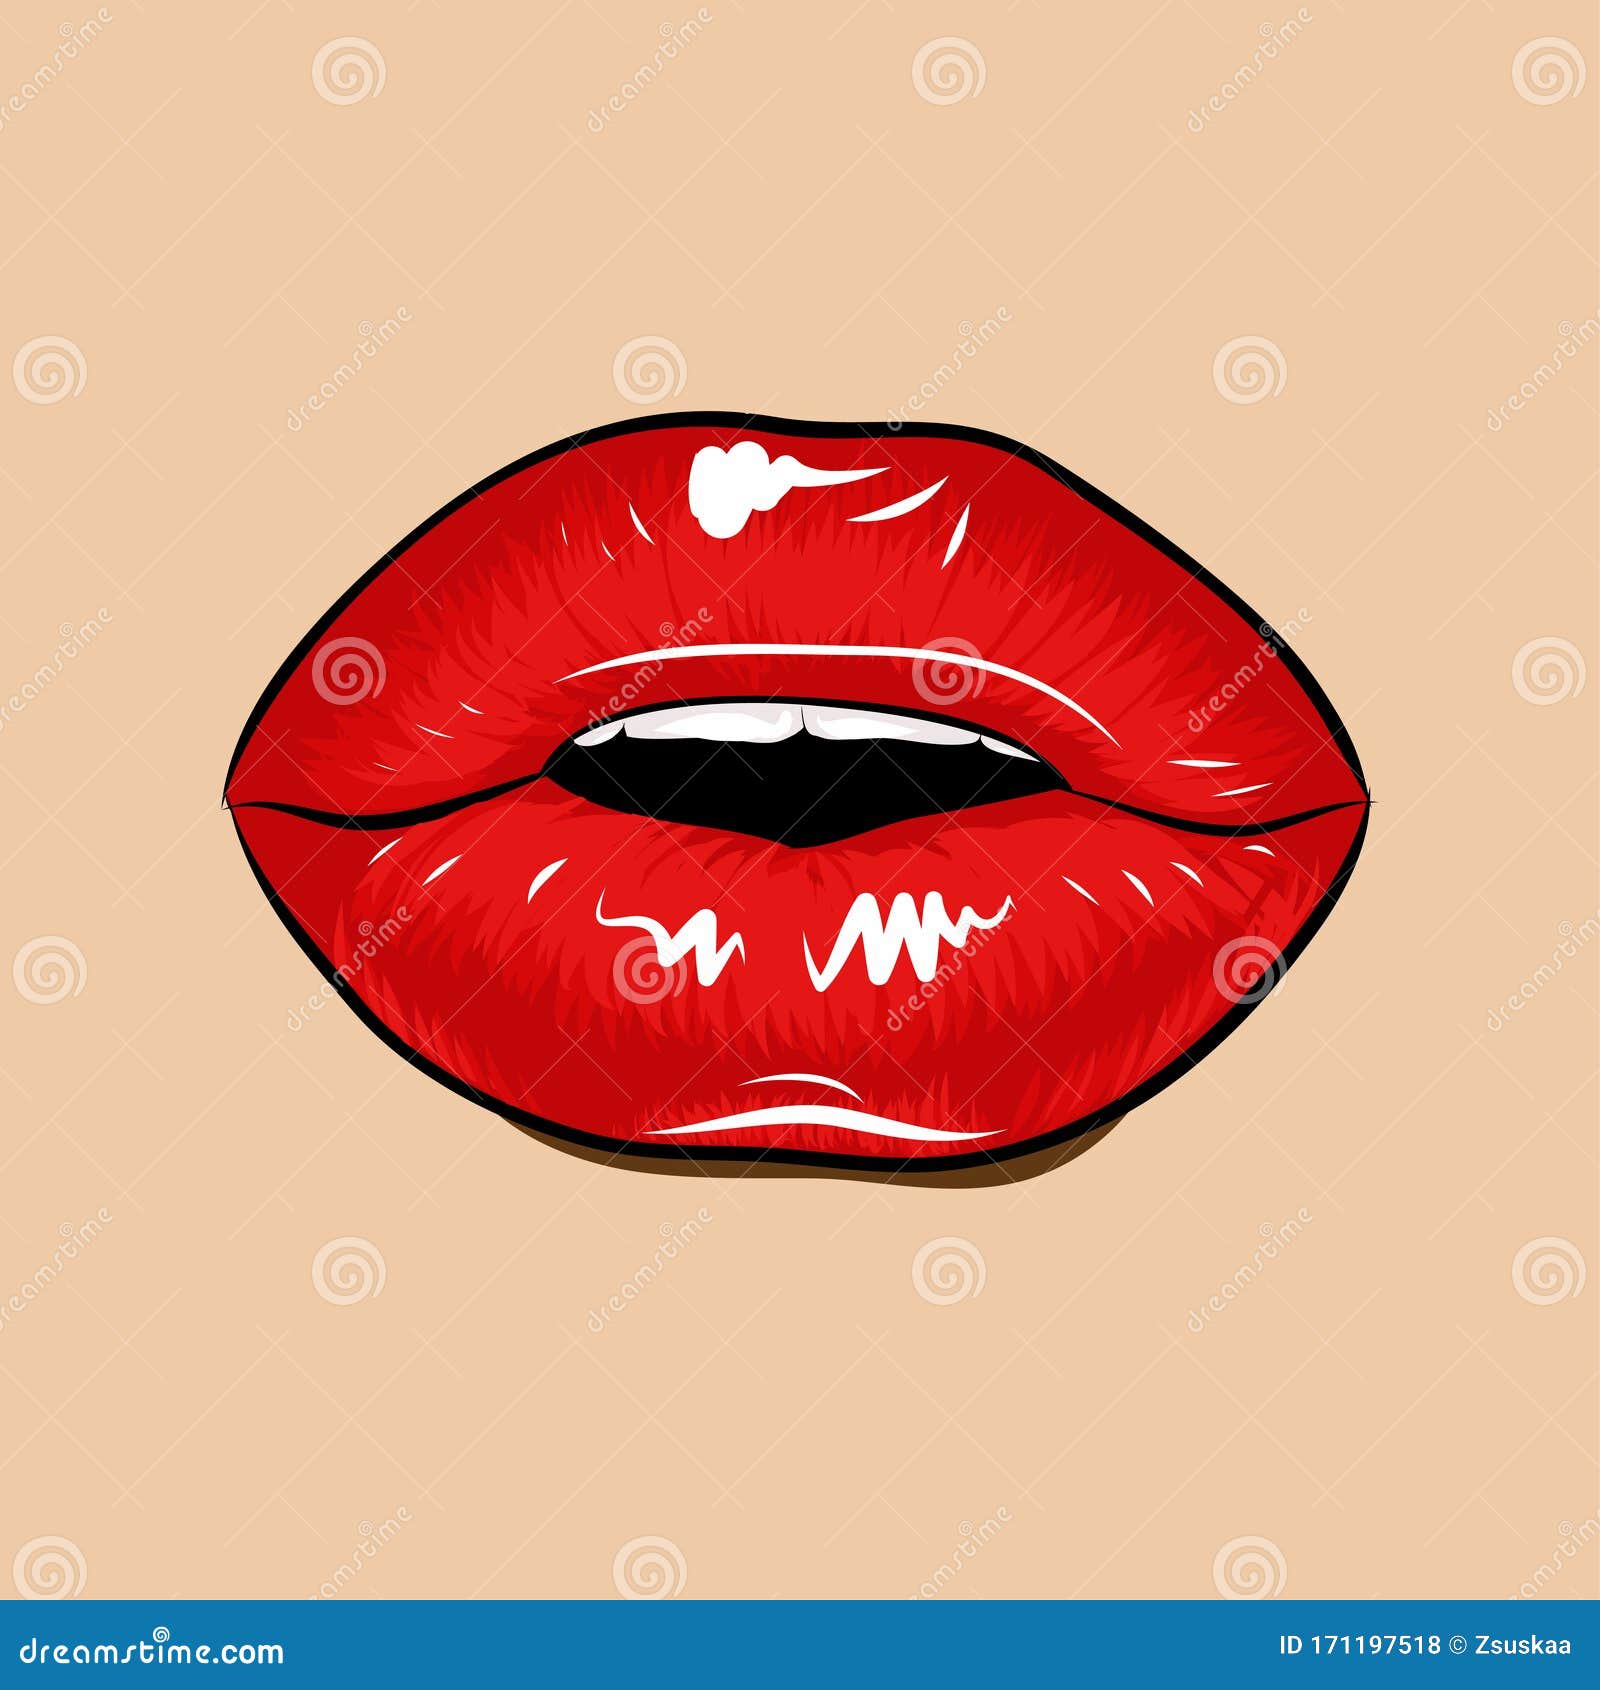 Sexy Woman Cartoon Mounth With Red Lips Digital Art by Dean Zangirolami -  Pixels